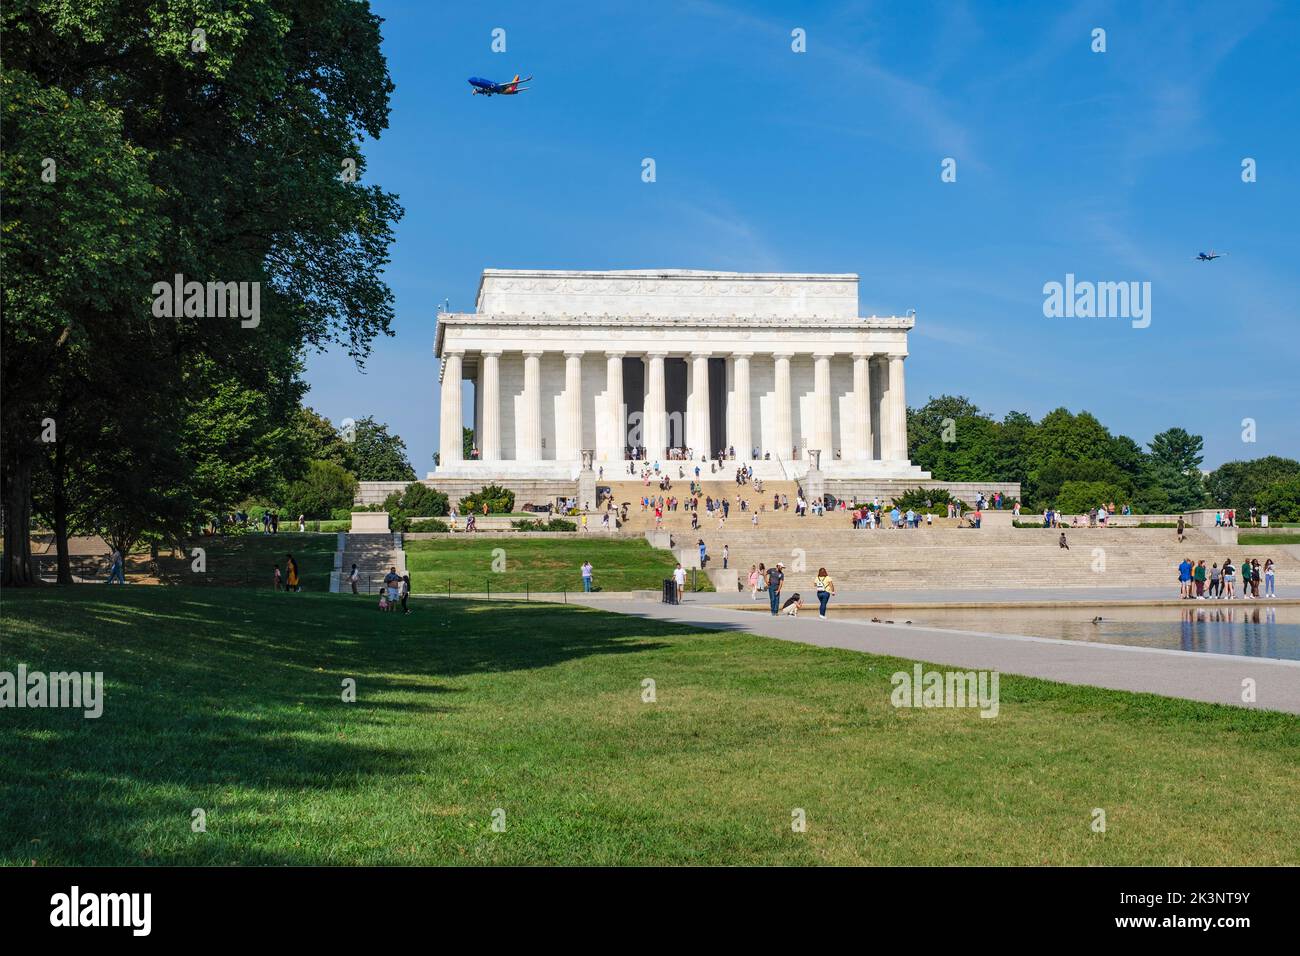 Lincoln Memorial, Washington, DC, USA. Flugzeug nähert sich dem Reagan National Airport. Mehrfachbelichtung. Stockfoto